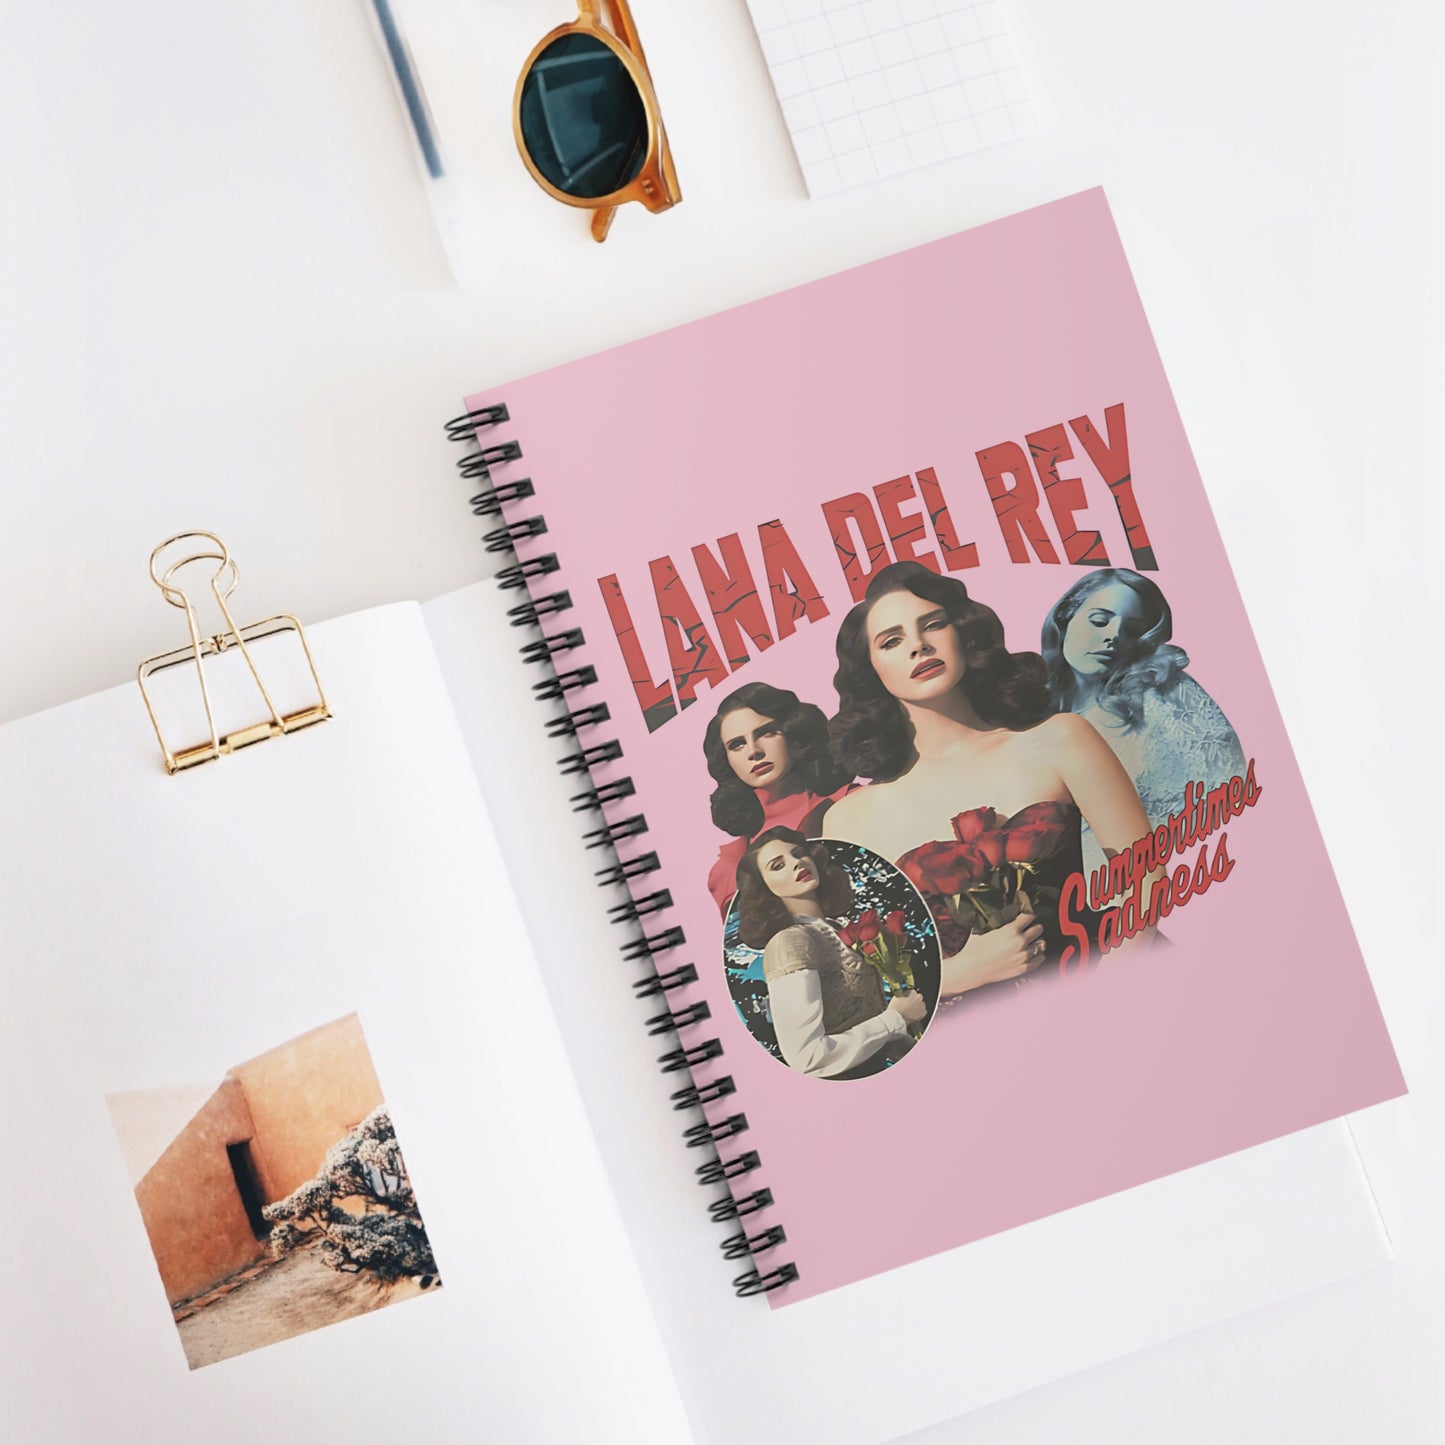 Lana Del Rey Summertime Sadness Ruled Line Spiral Notebook